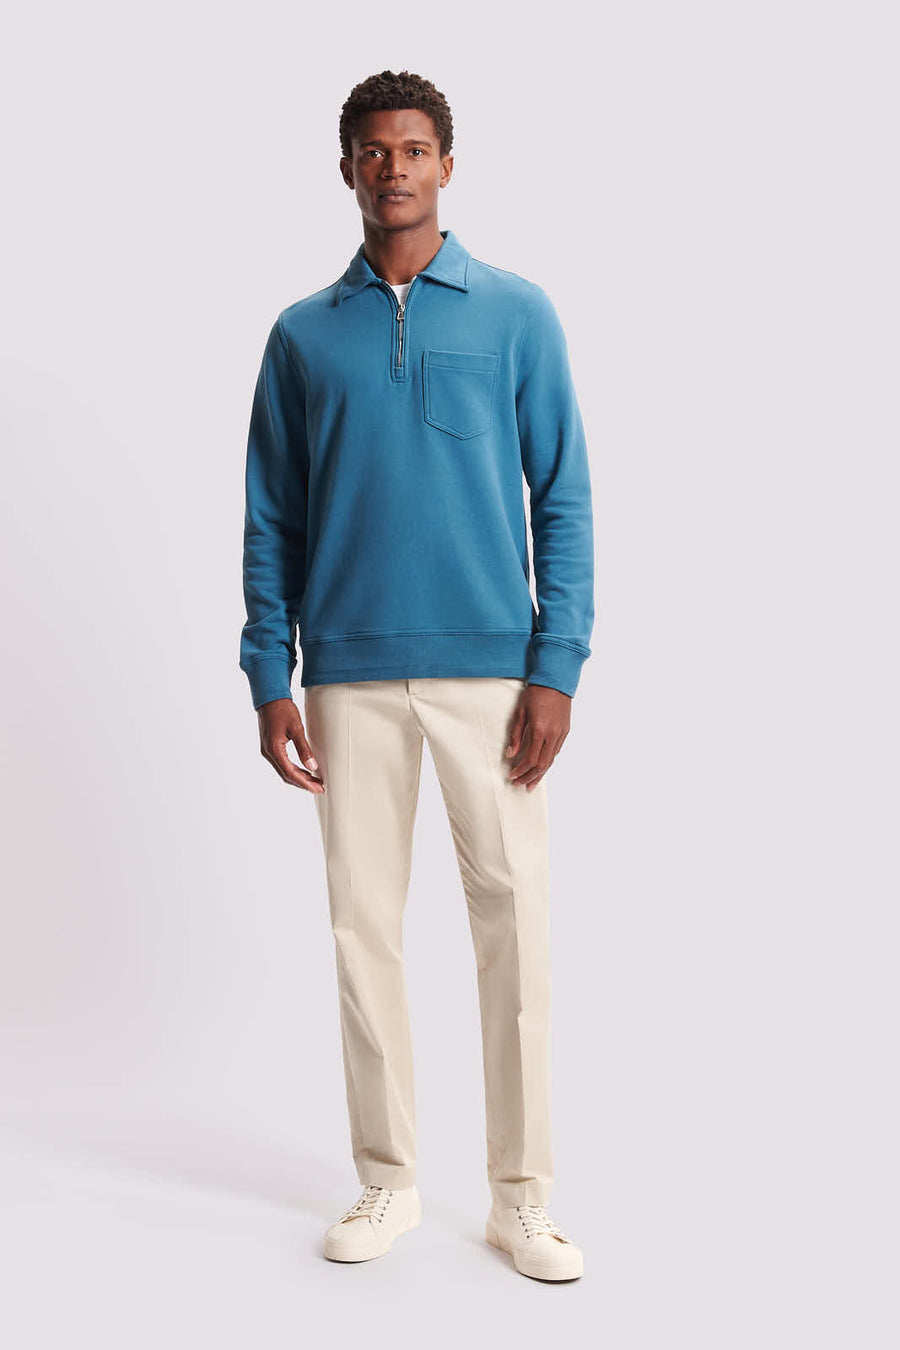 French Terry 1/4 Zip Collar Sweatshirt in Teal Blue